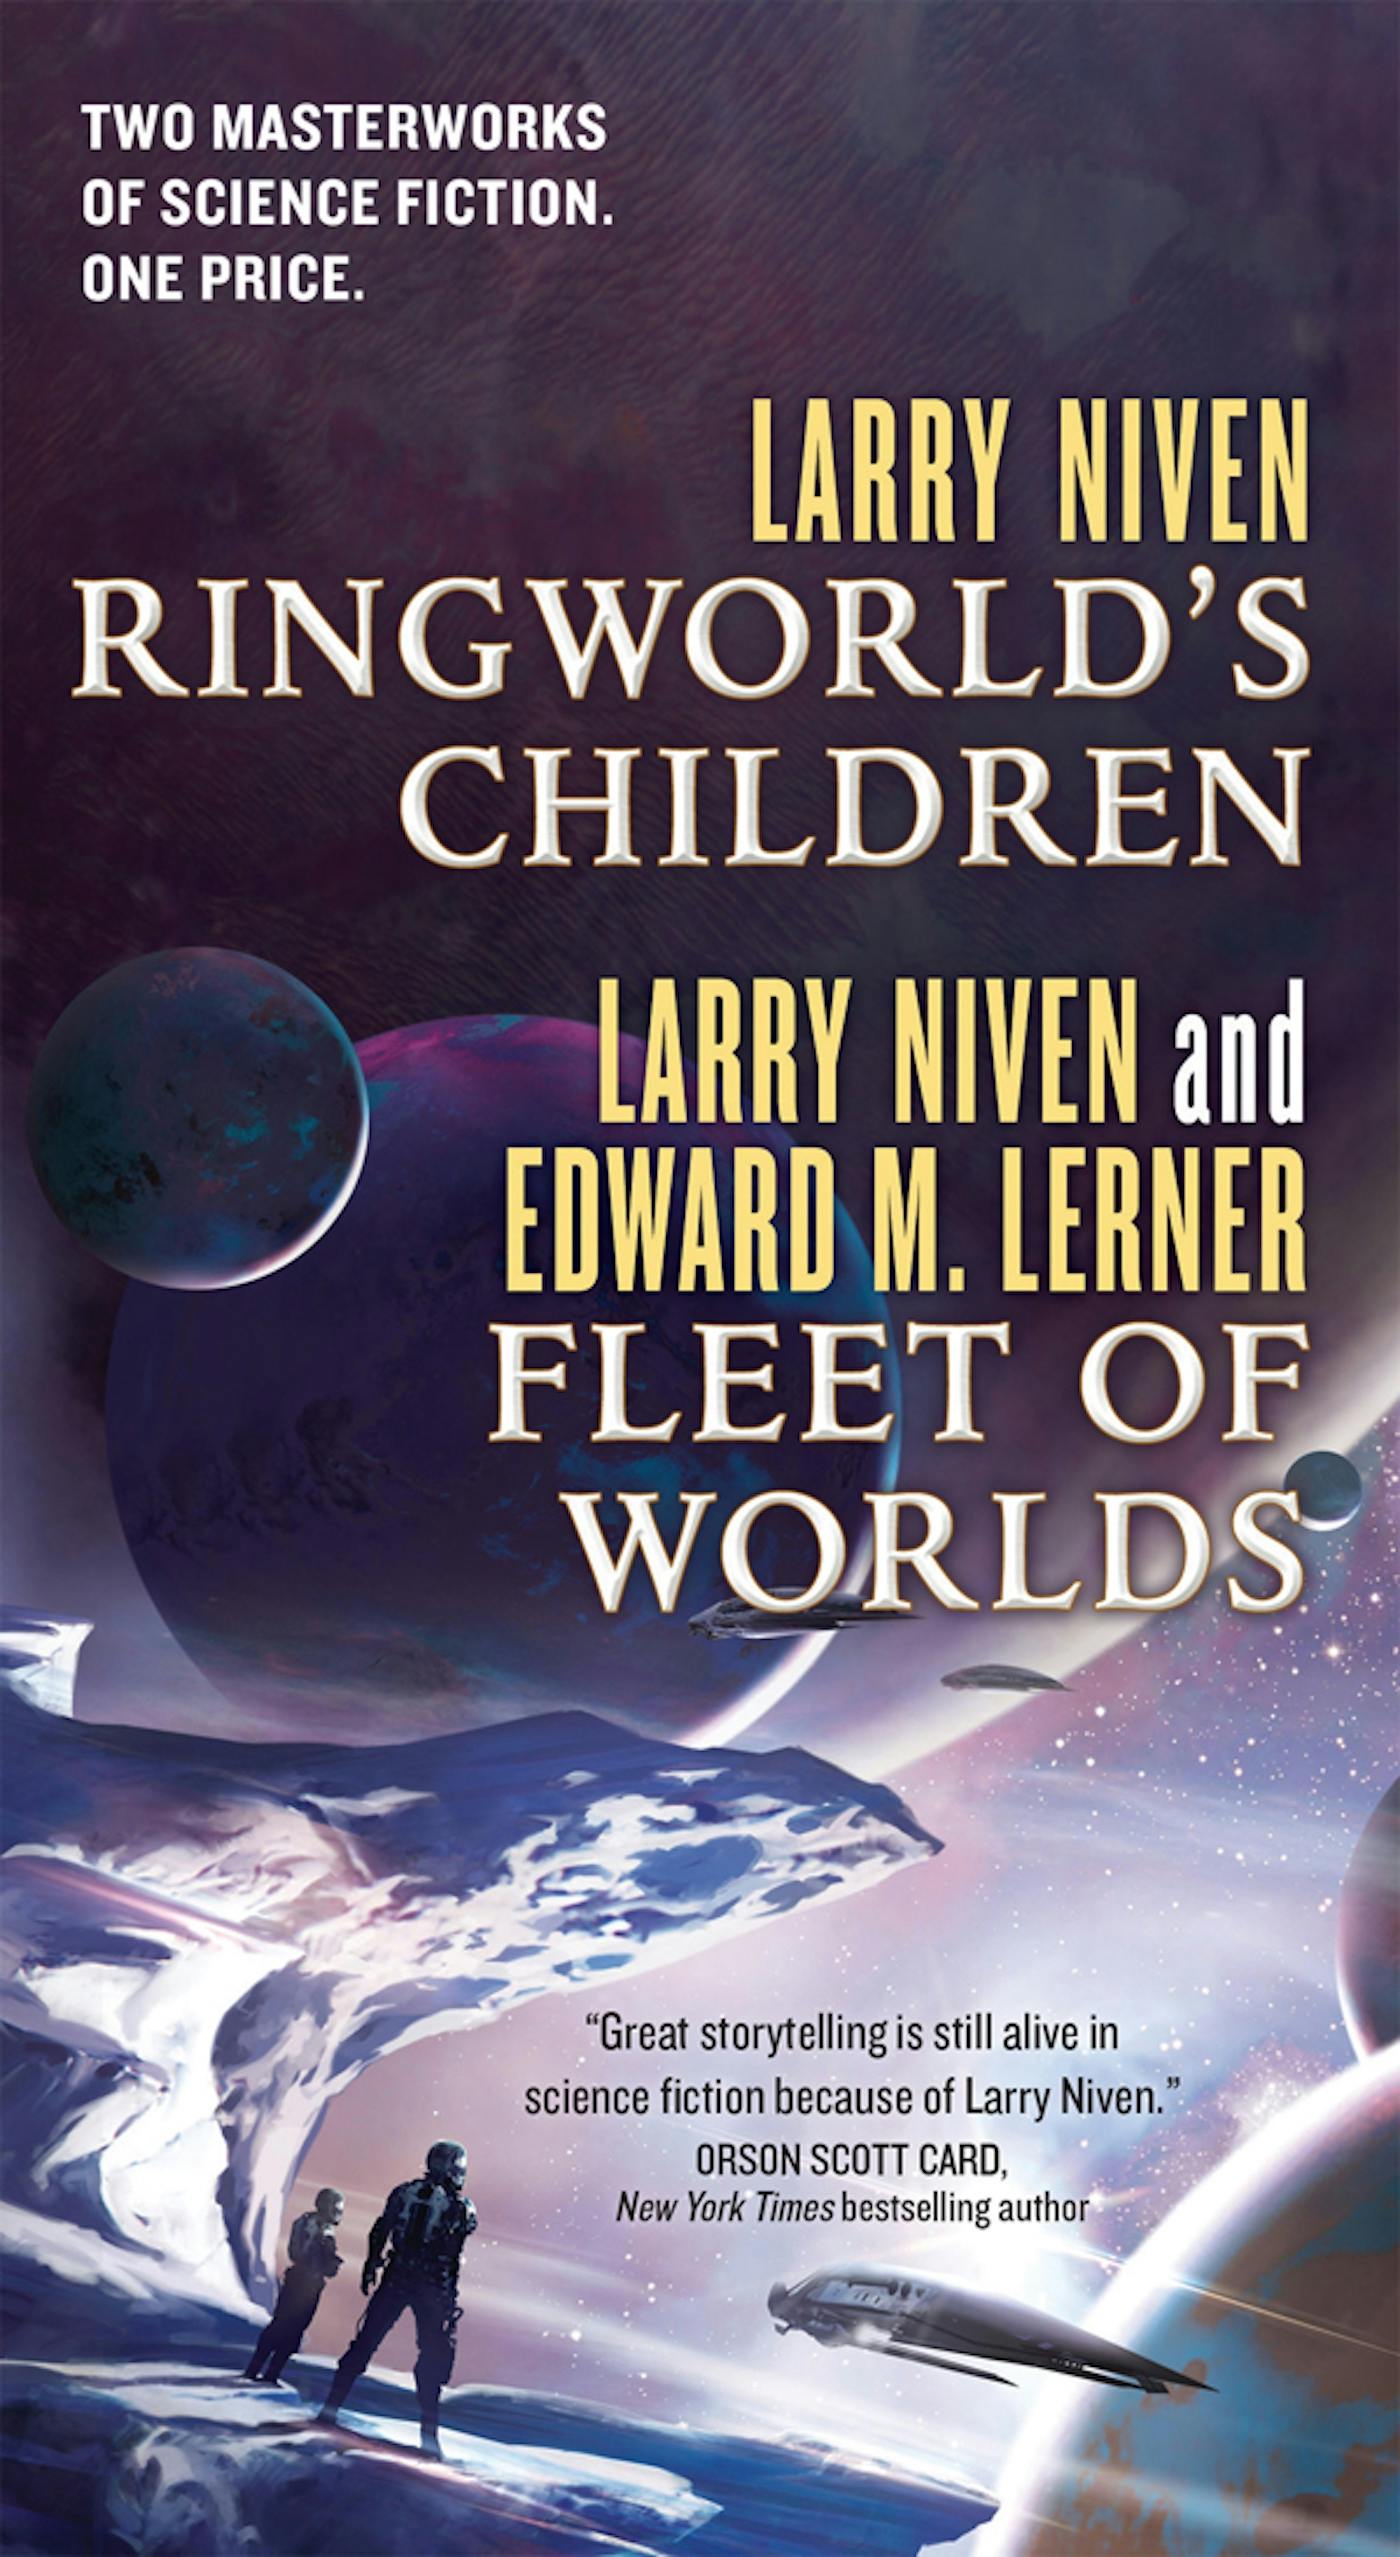 Image of Ringworld's Children and Fleet of Worlds